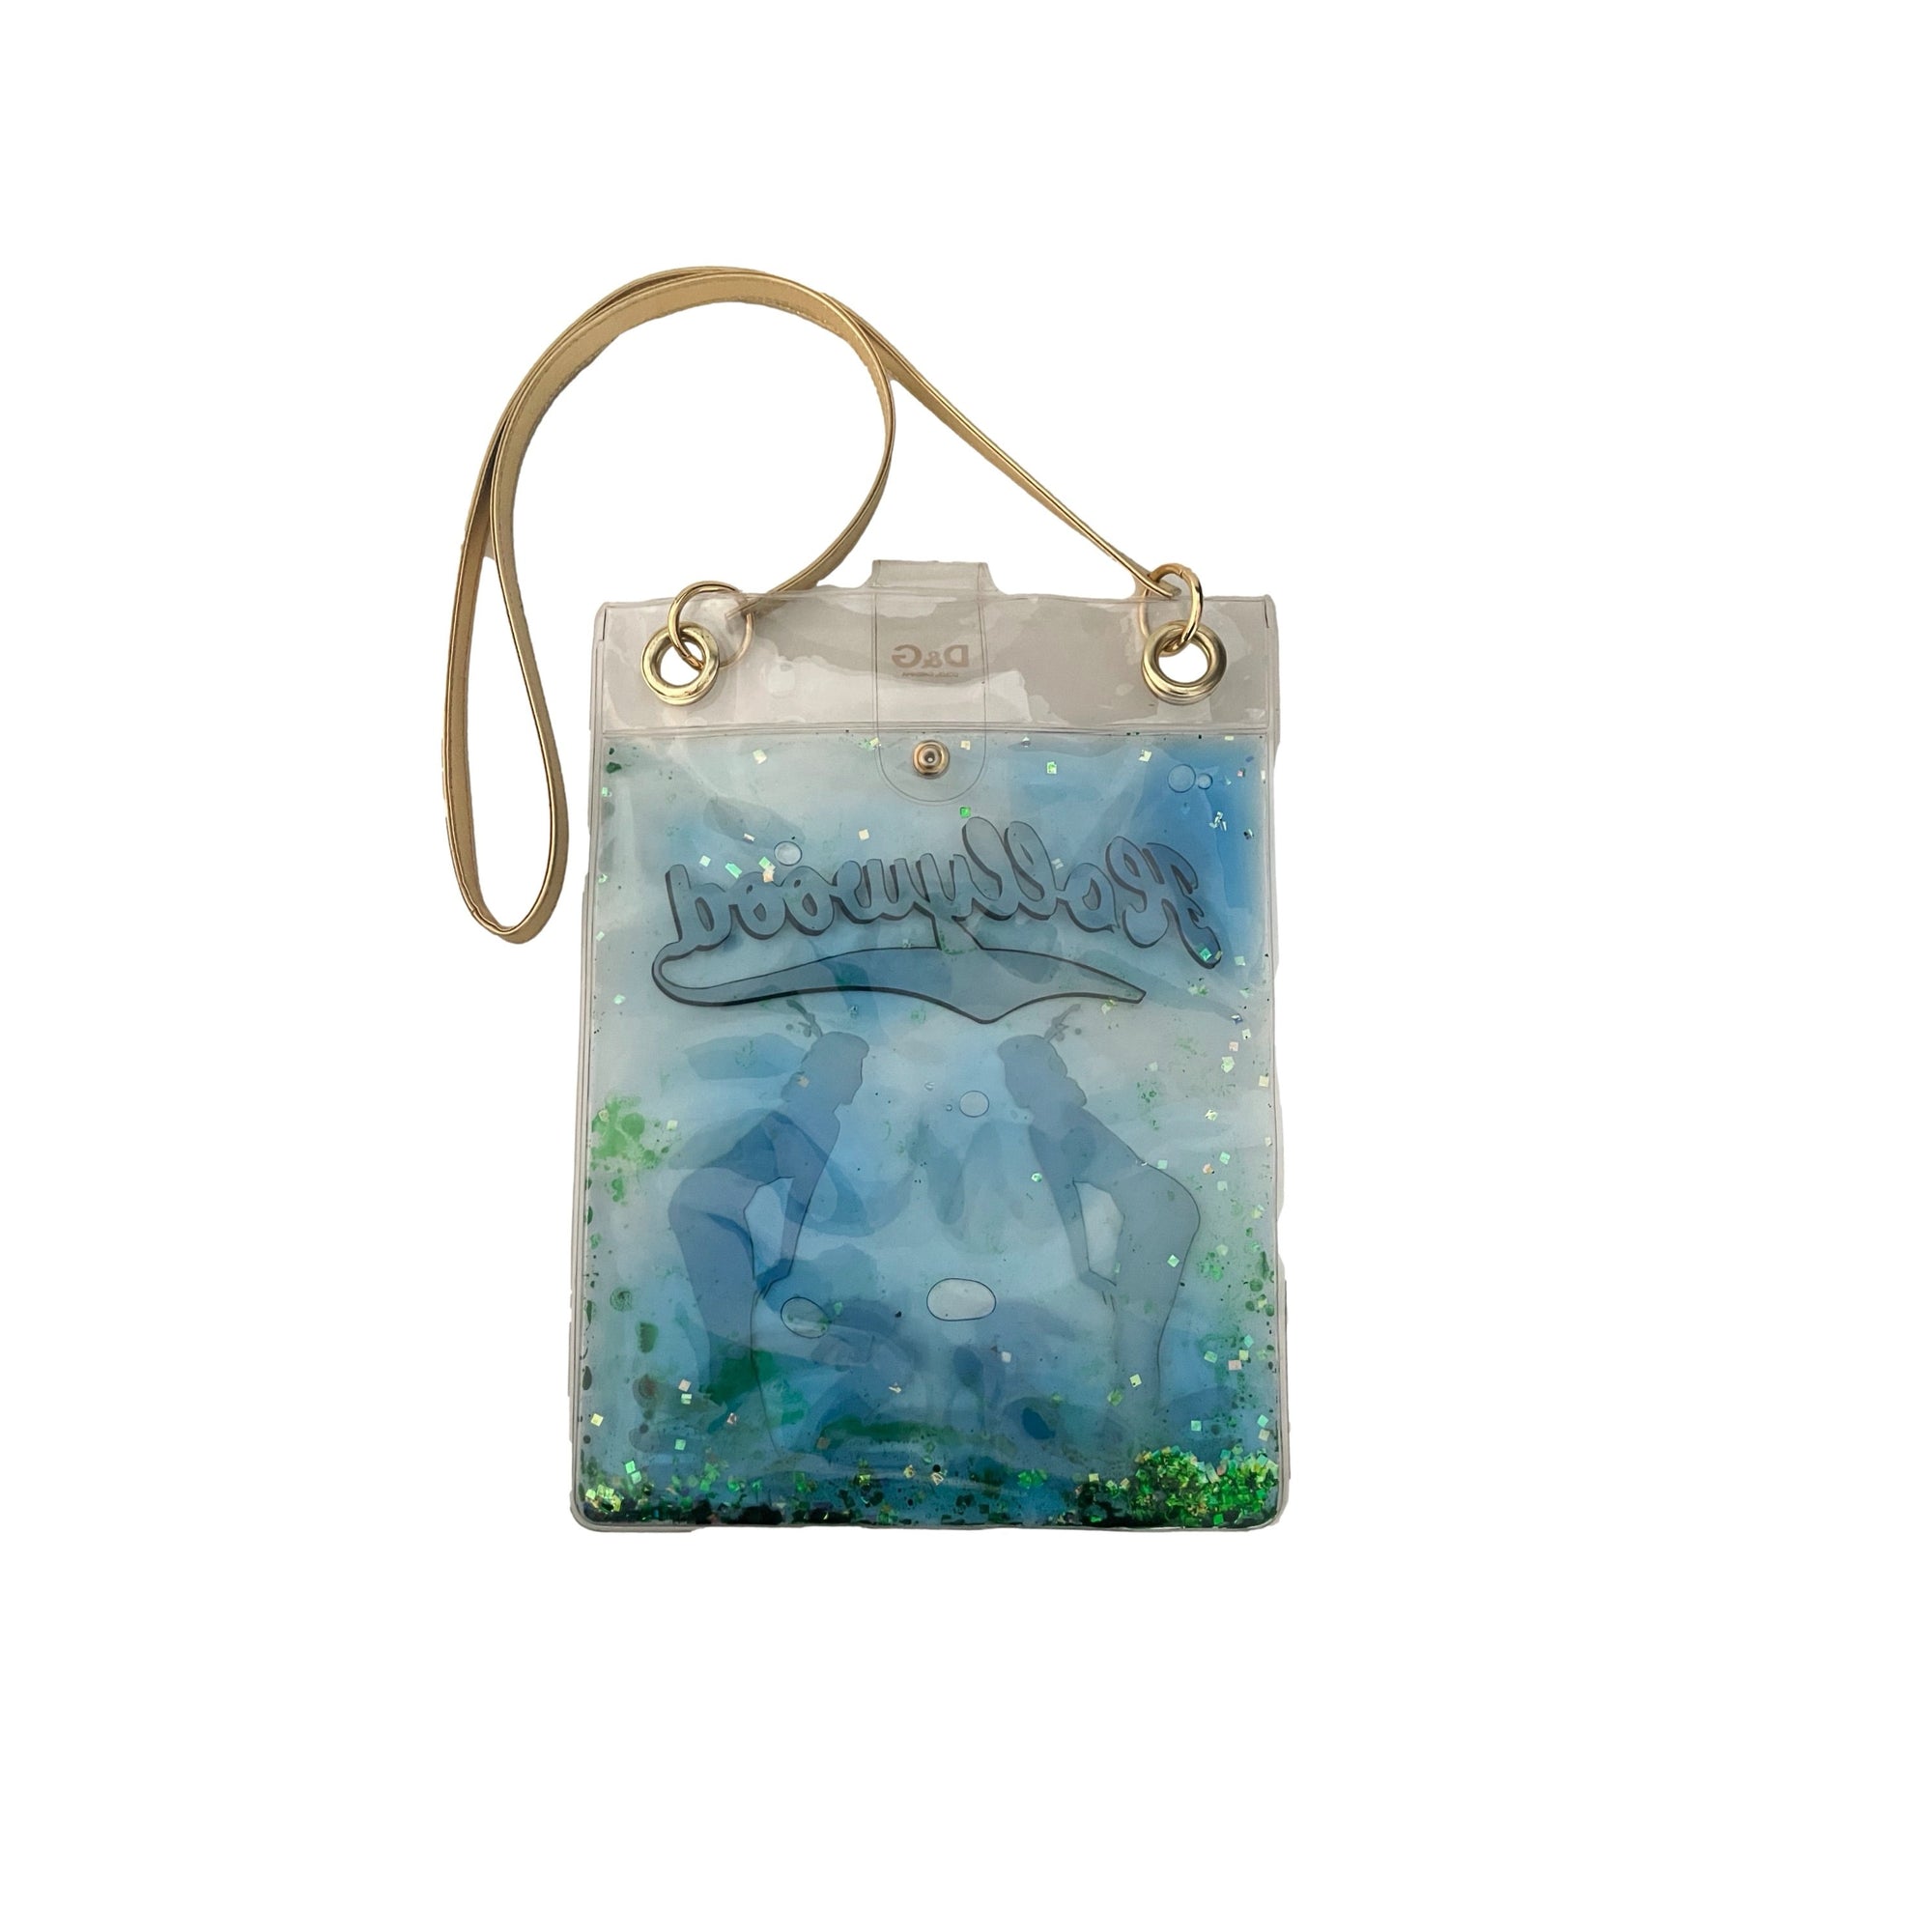 Dolce & Gabbana Mermaid Clear Bag - Handbags